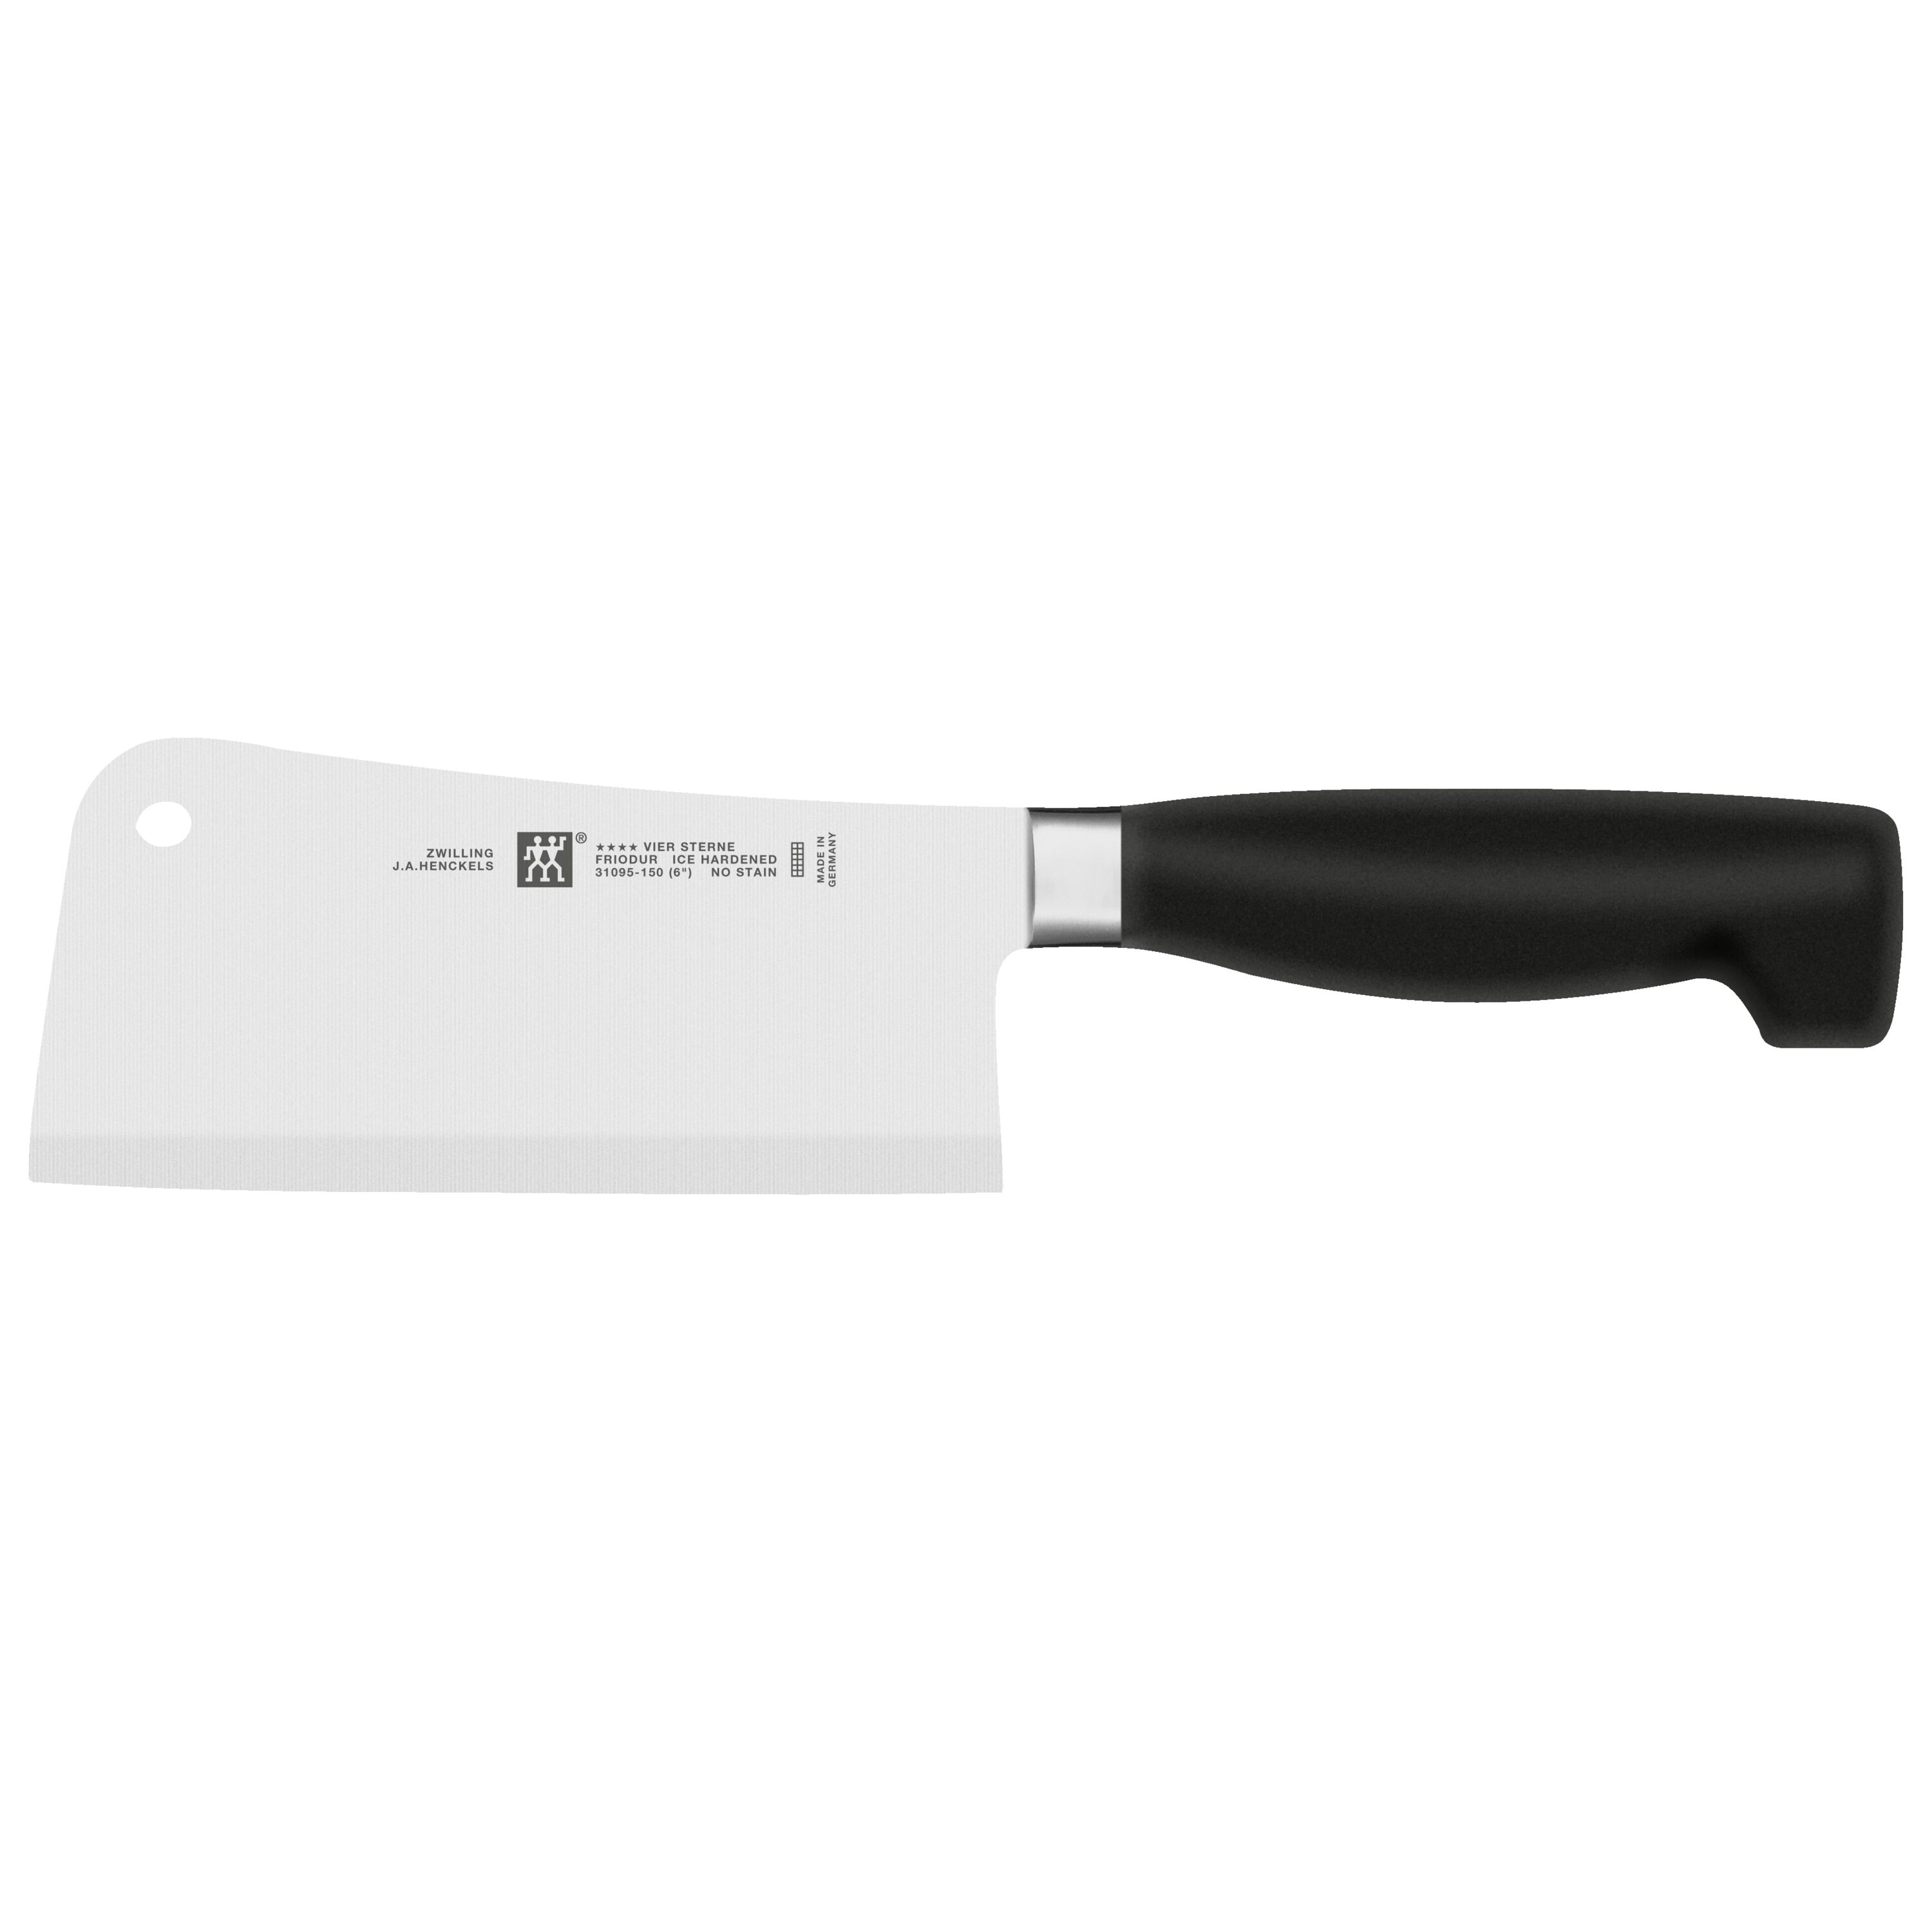 Six Star Block 4 KitchenAid Mundial Chef Farberware Cleaver Knife